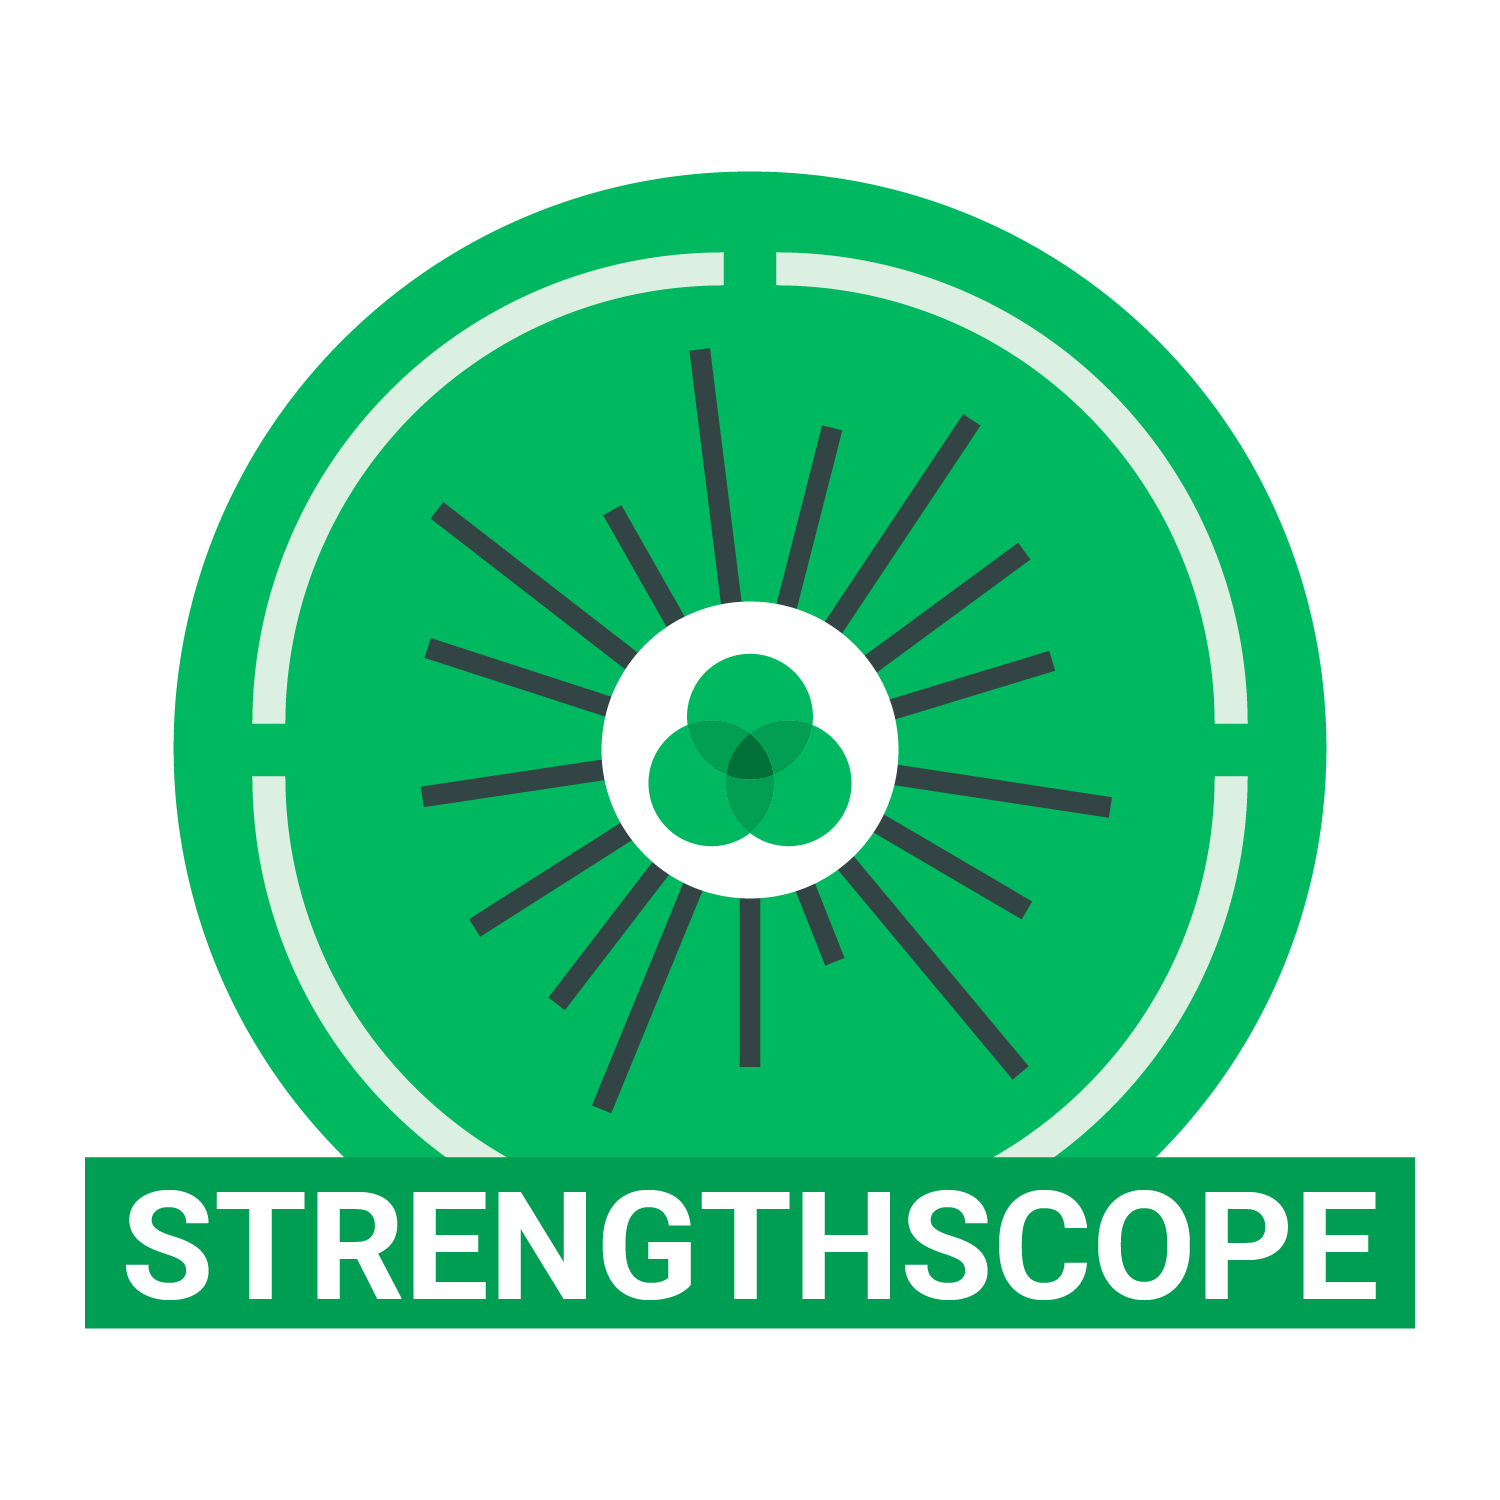 5-00554_Cloverleaf Assessment Logos_Strengthscope